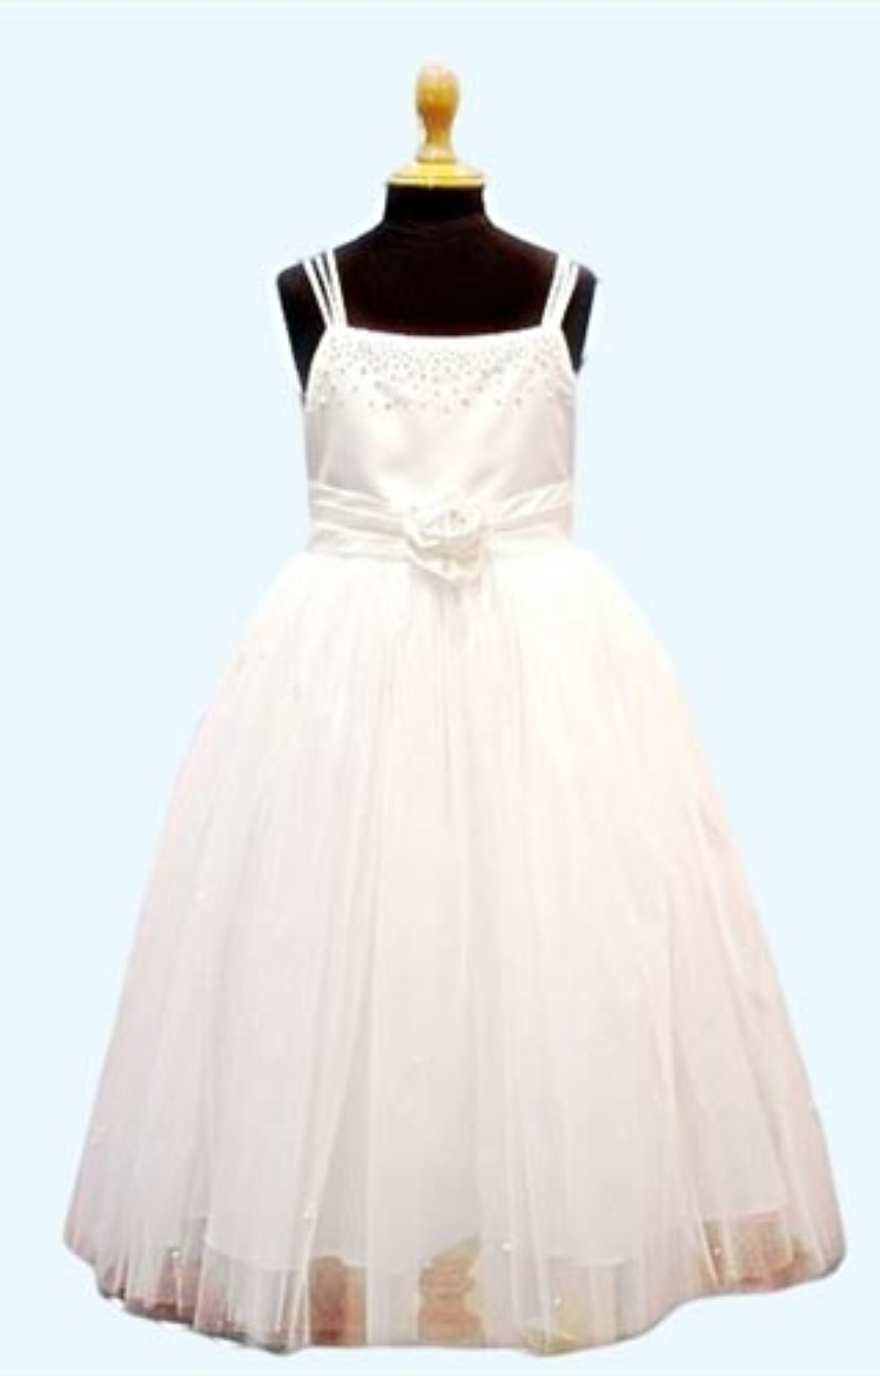 April Dress: WHITE or IVORY